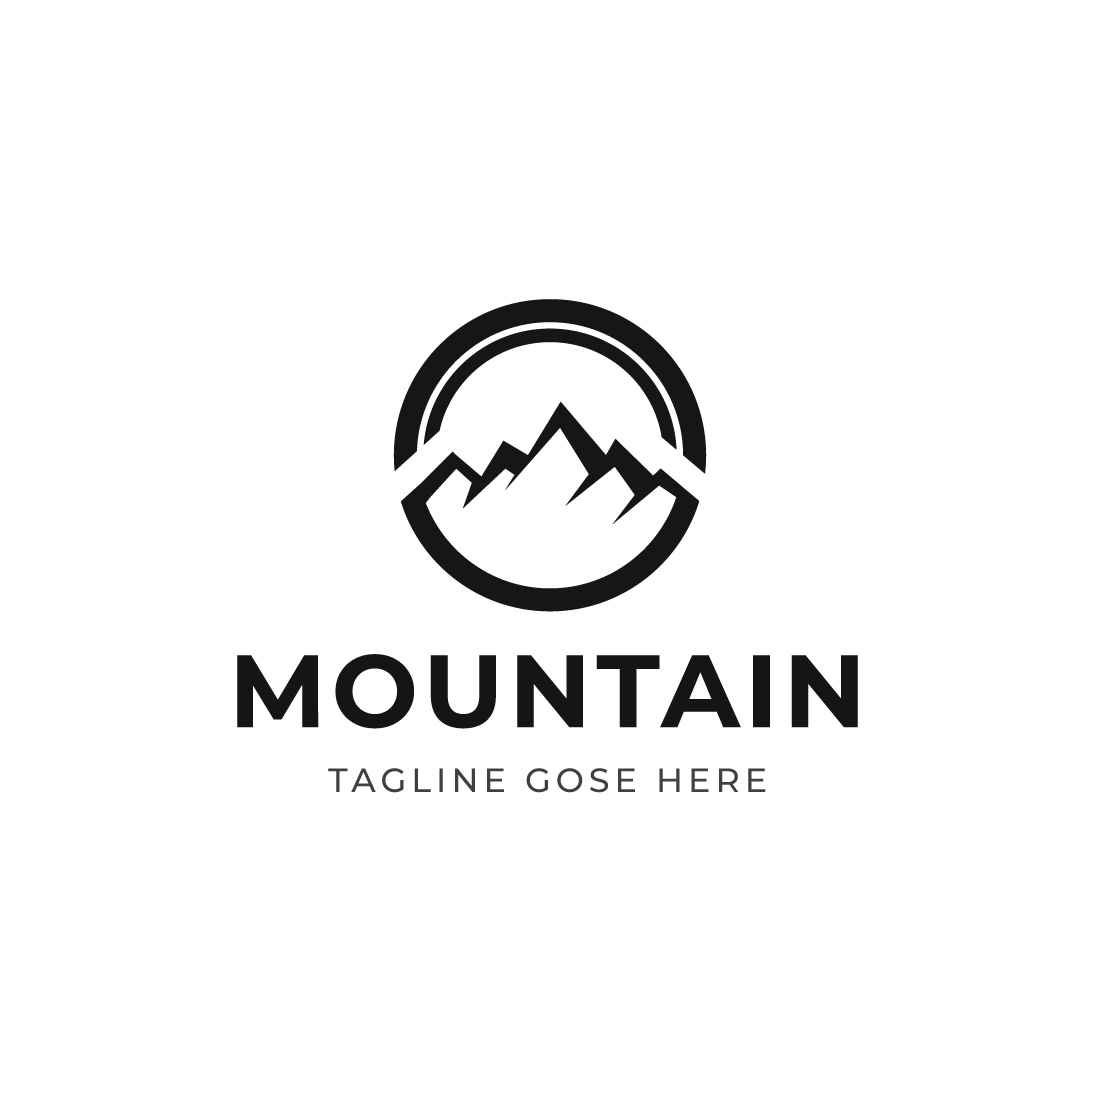 Circle mountain logo template preview image.